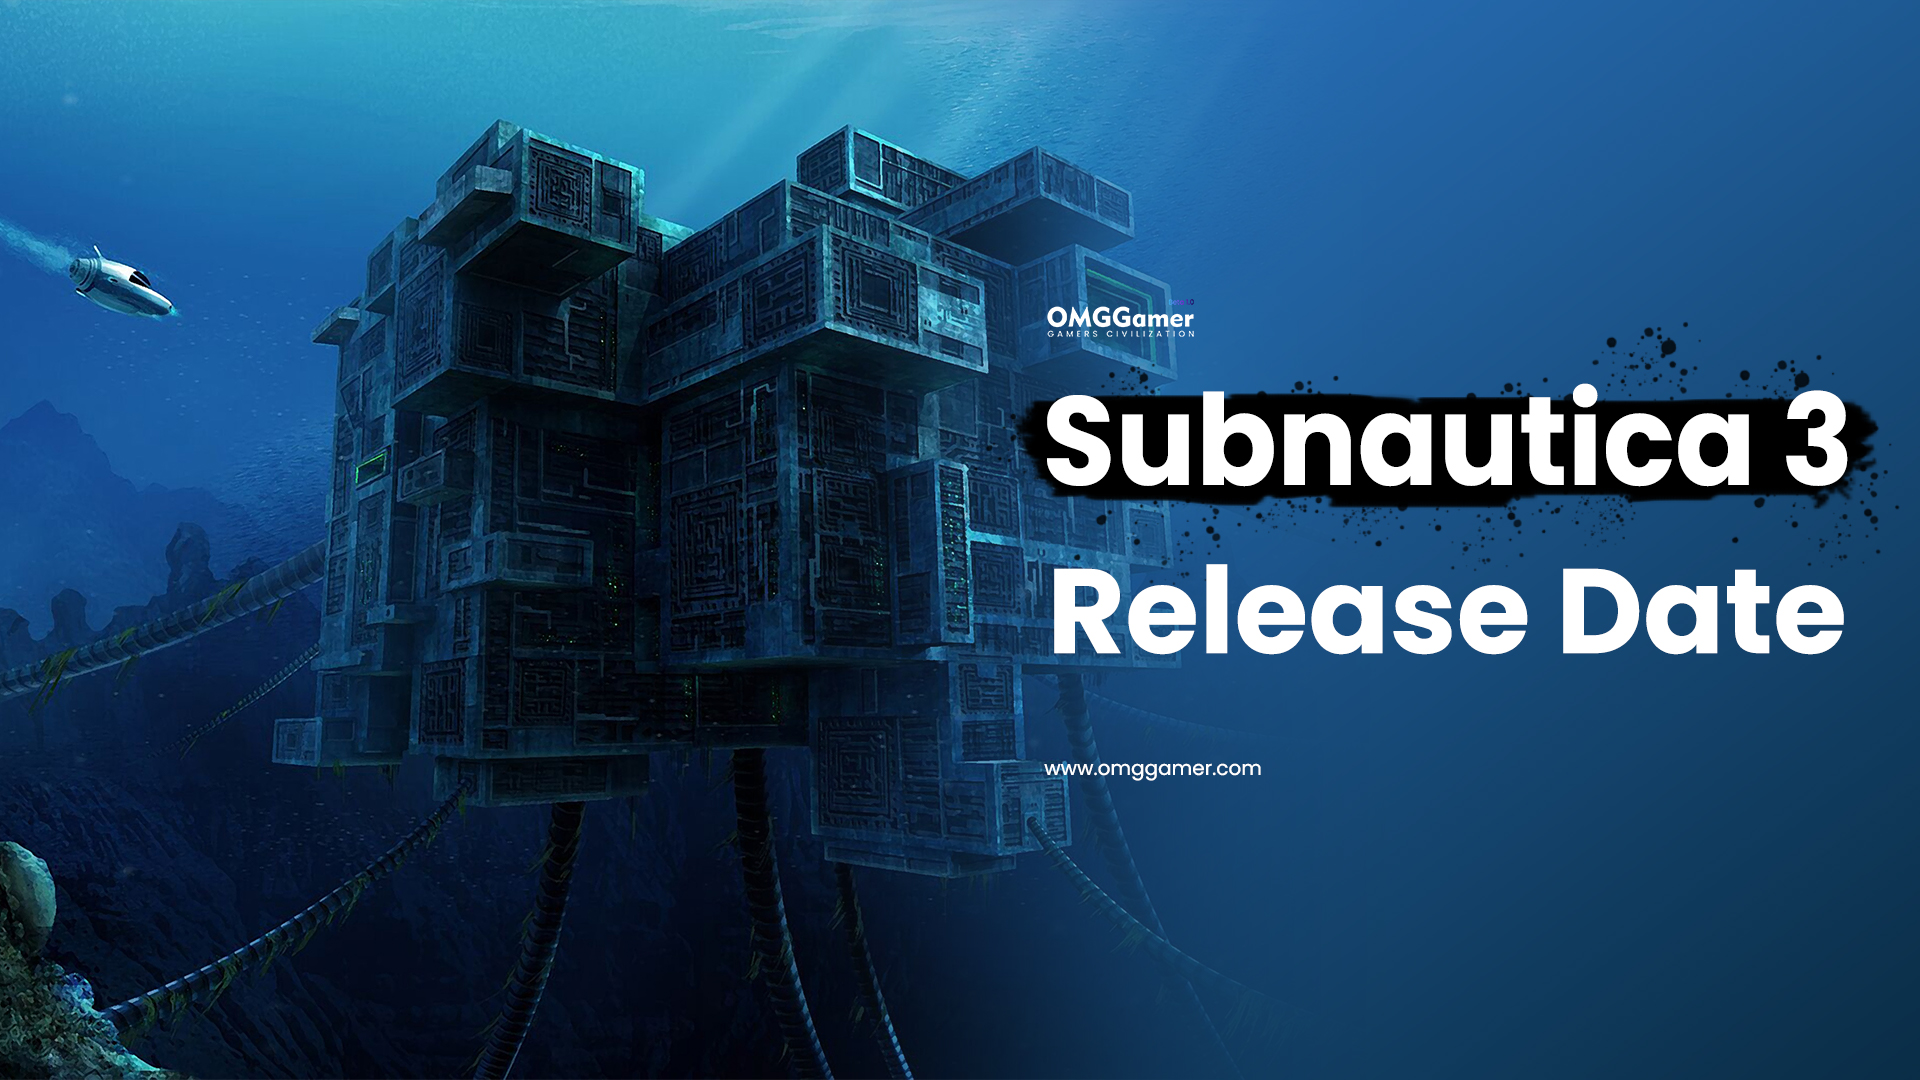 Subnautica 3 Release Date